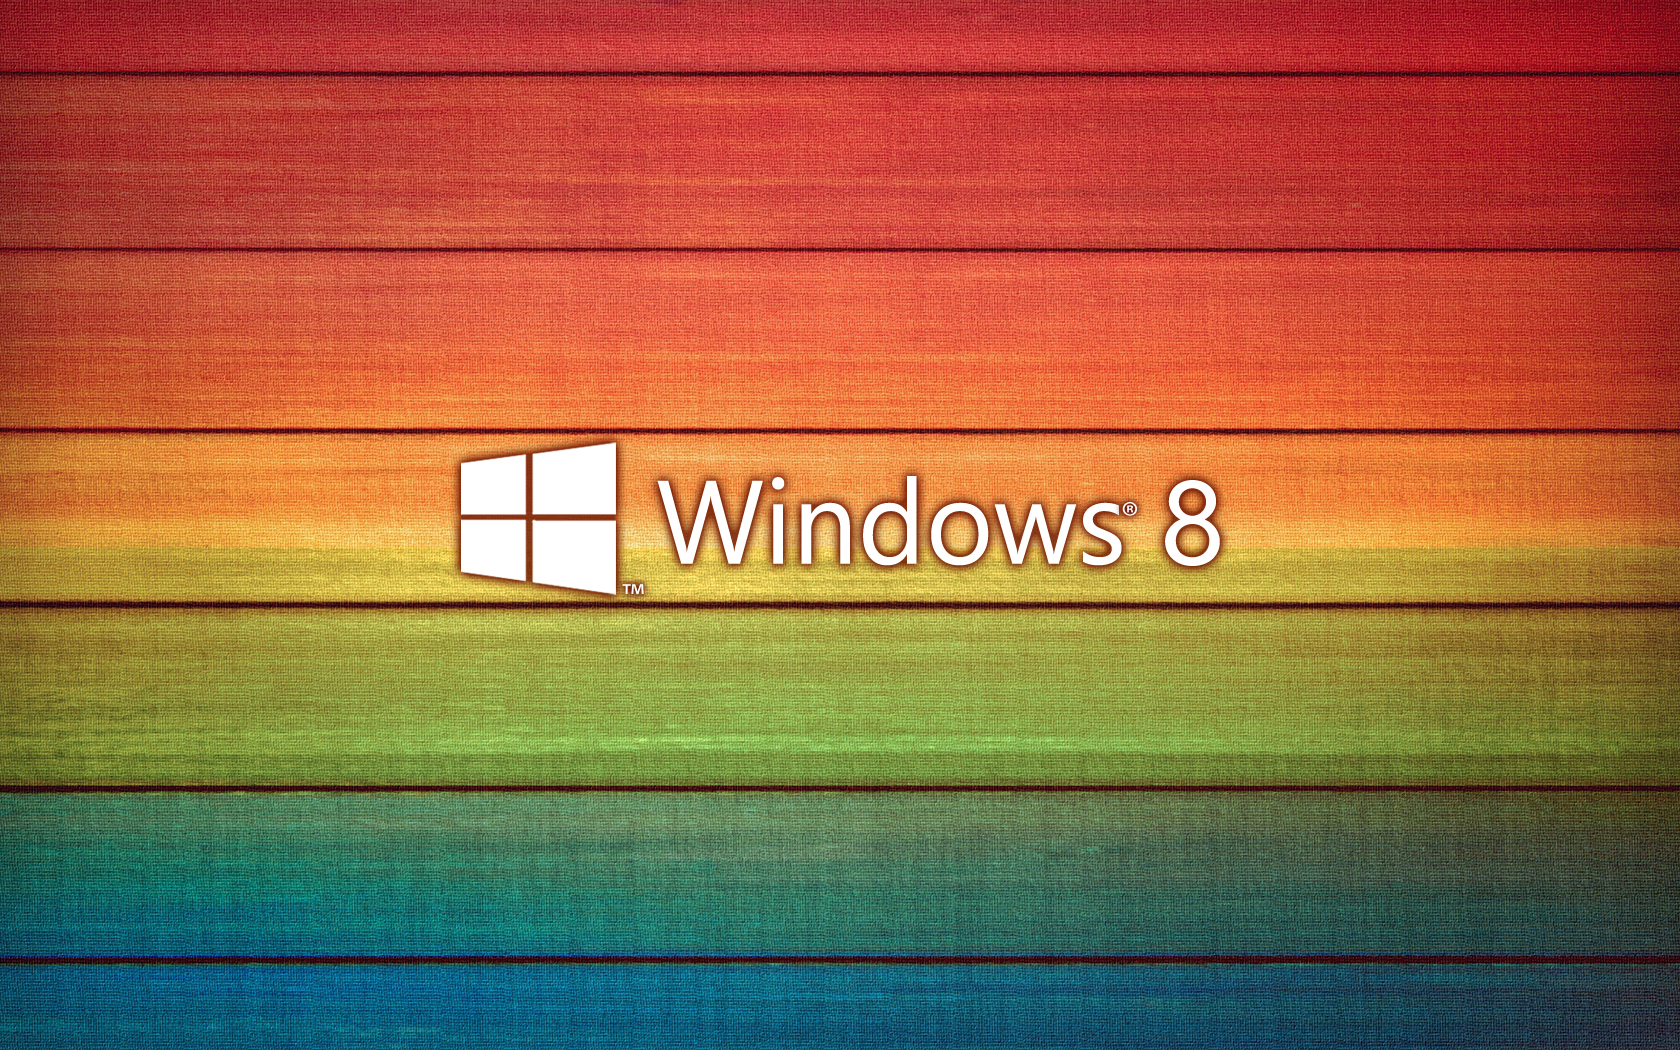 Windows 8 Backgrounds